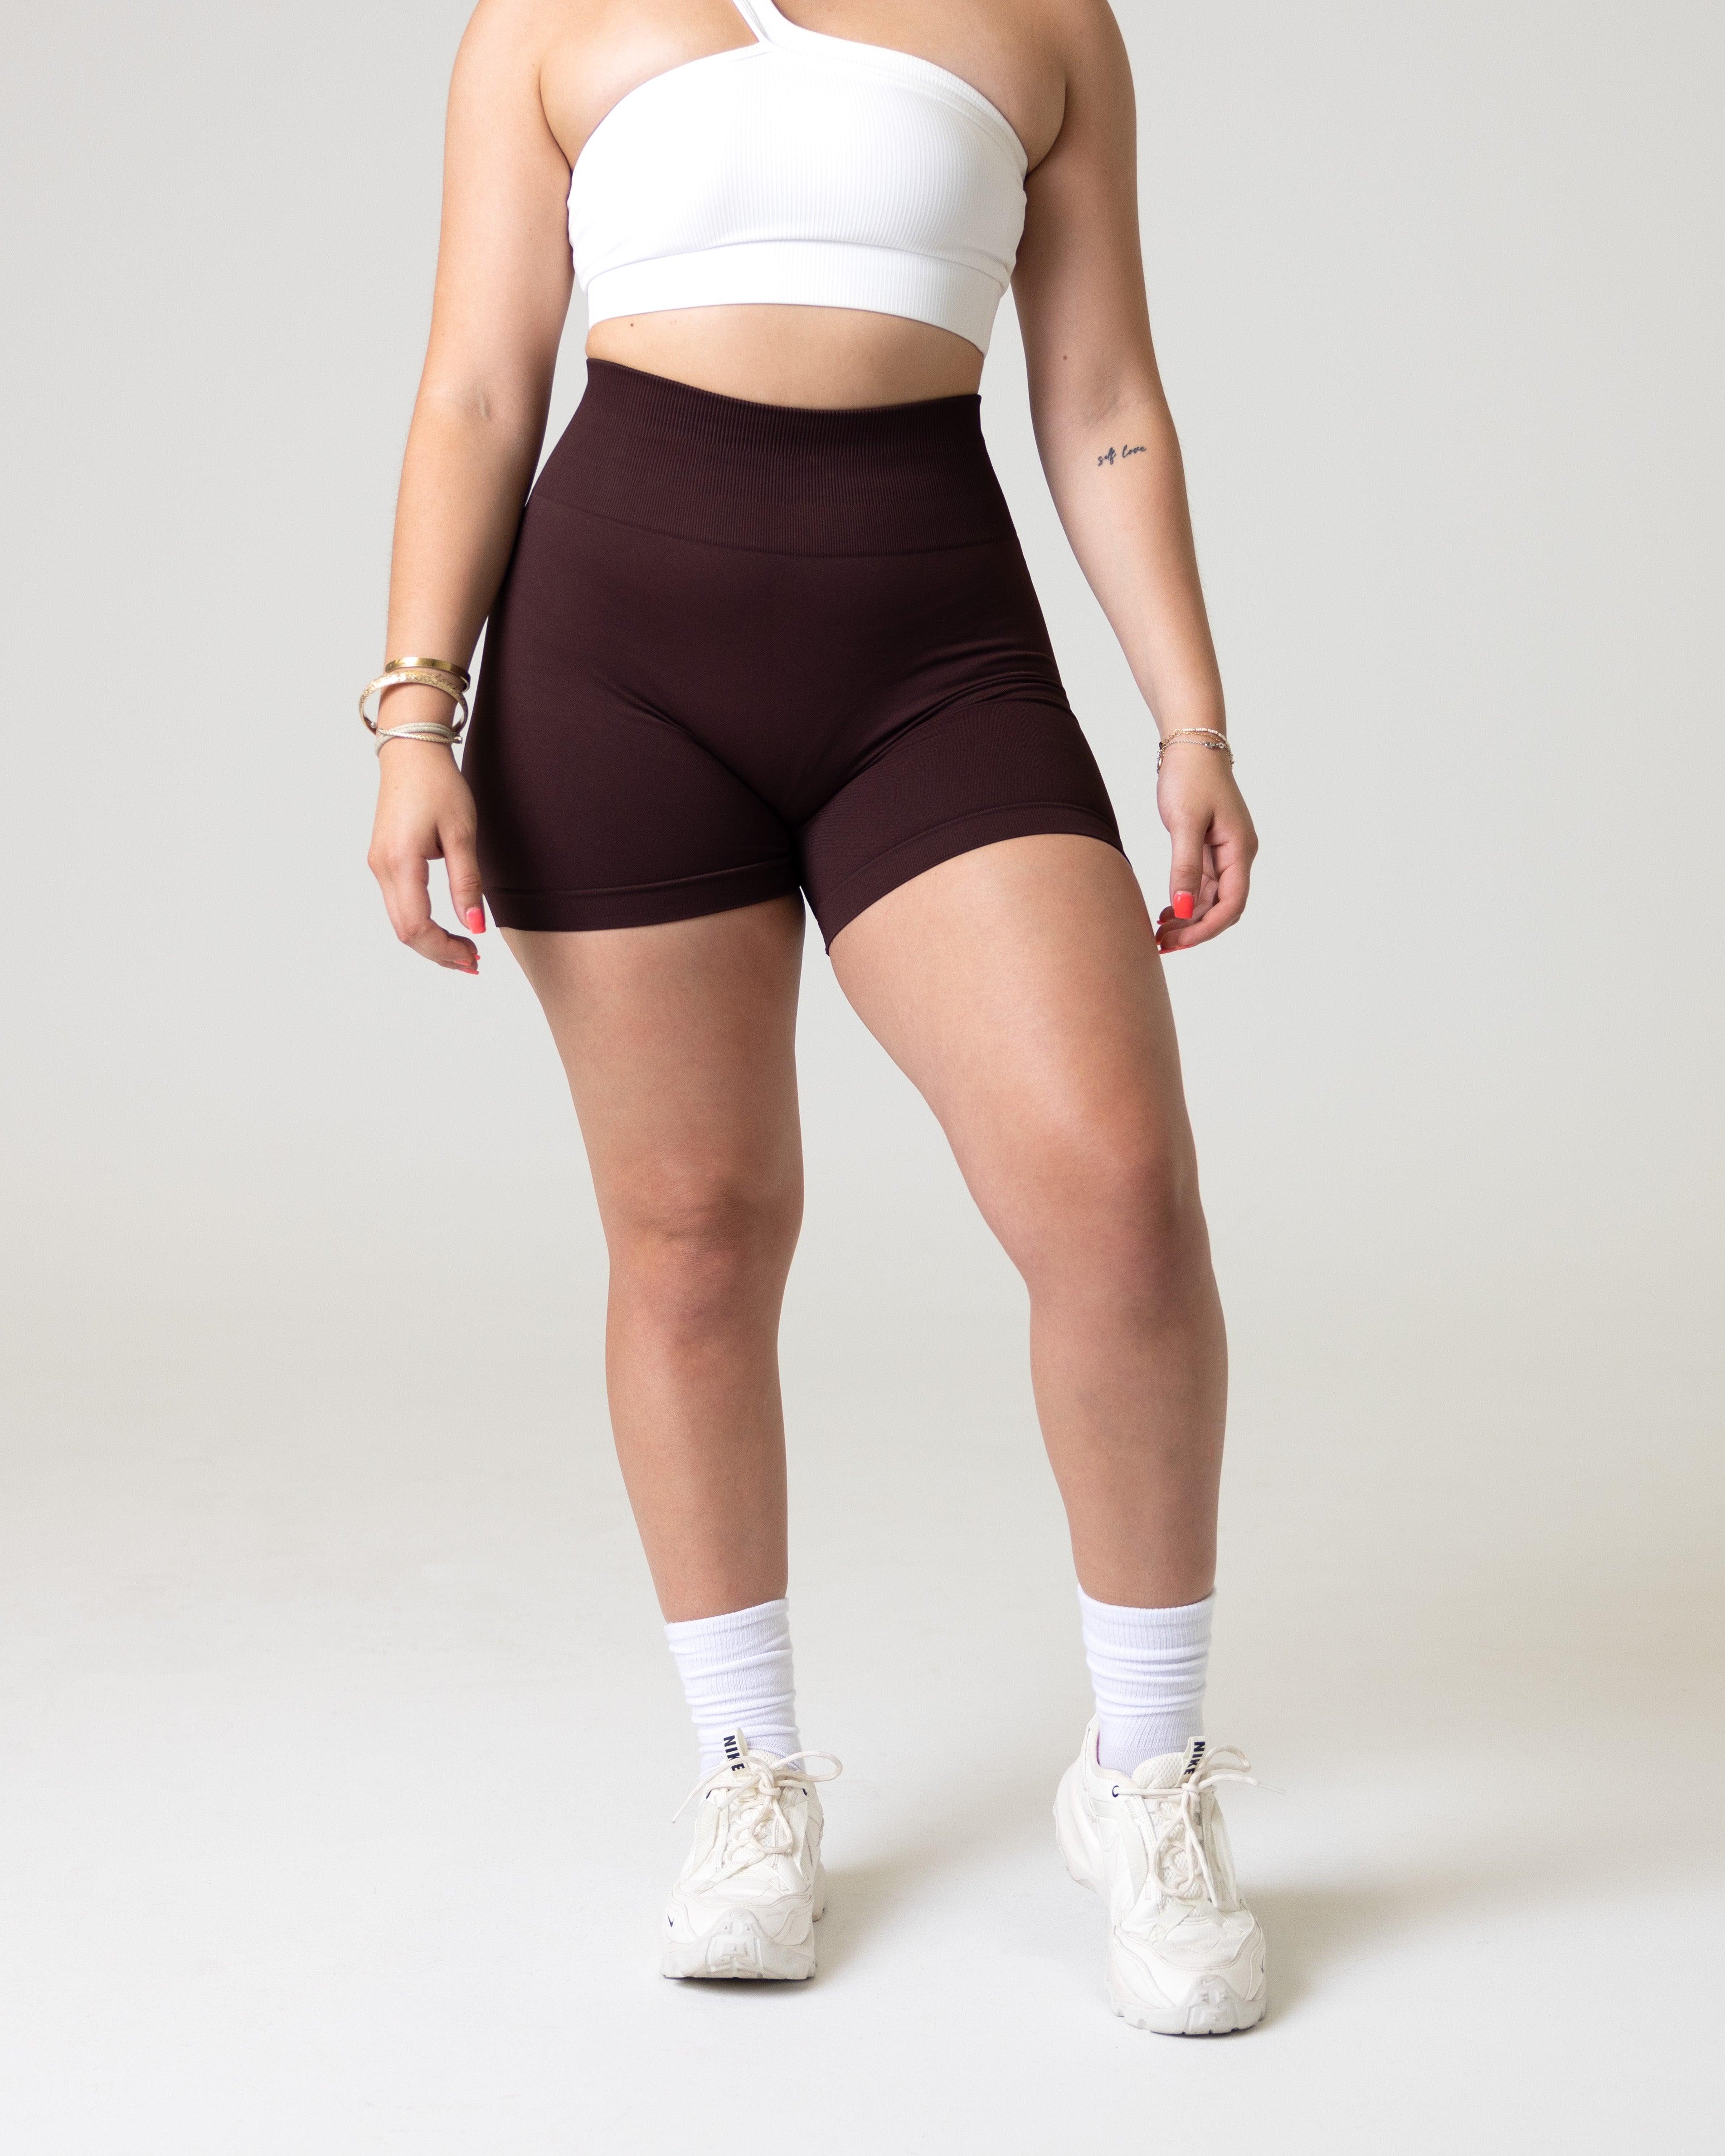 A woman wearing amplify seamless gym shorts